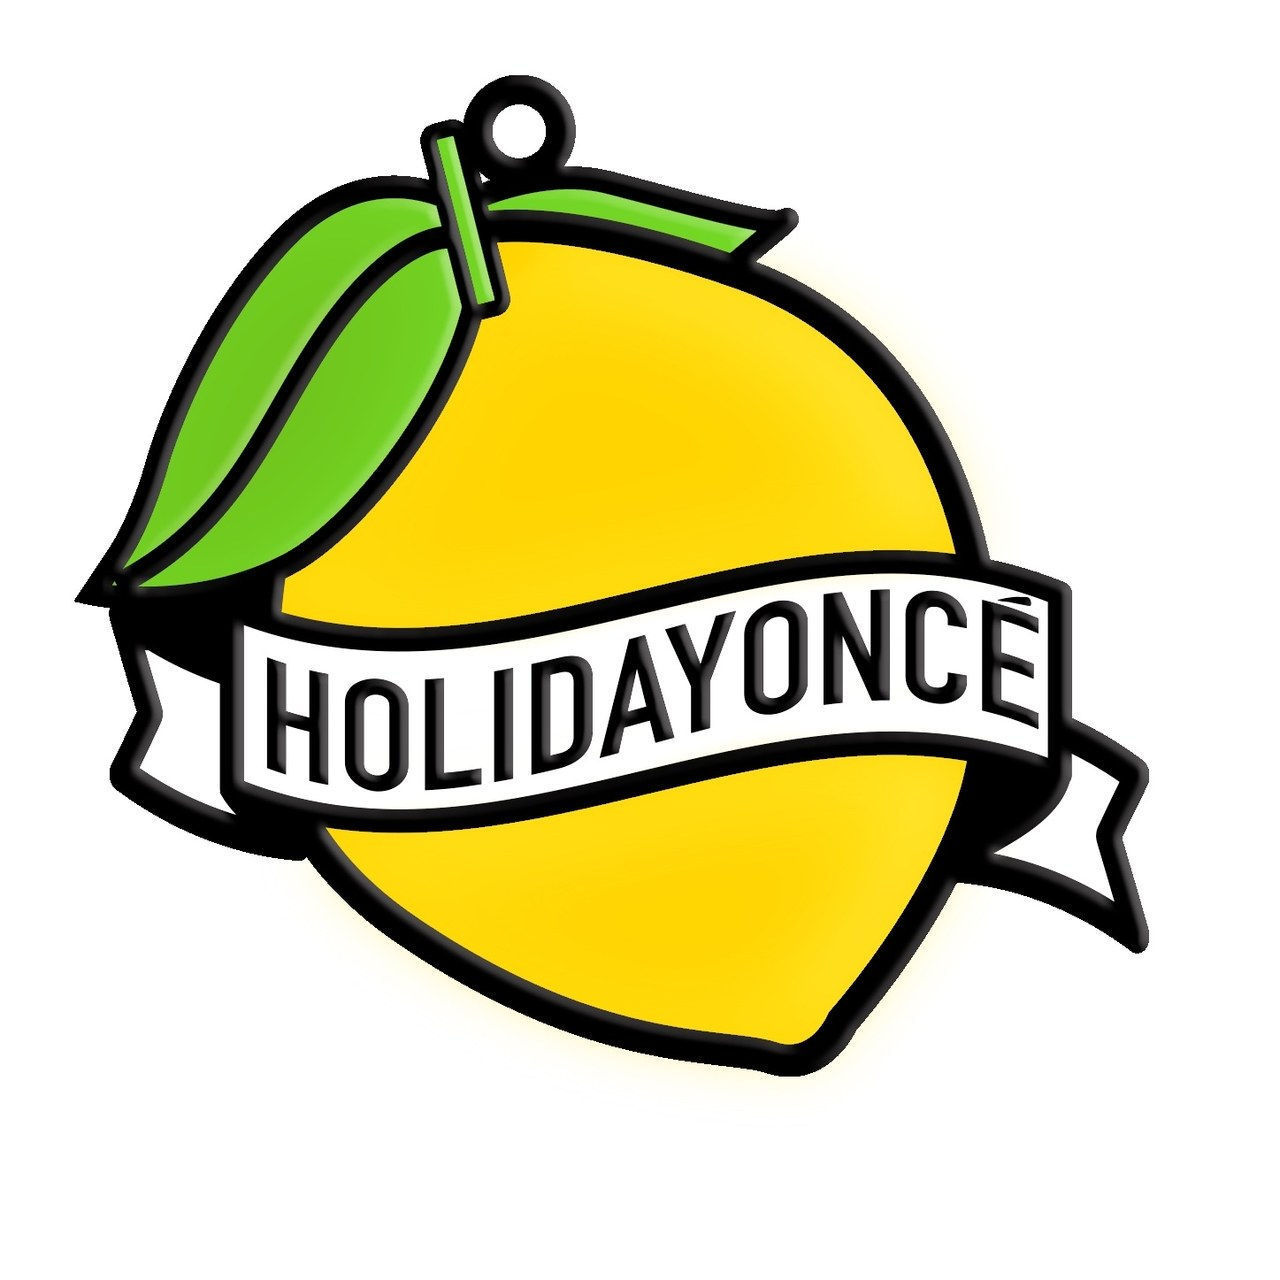 Holidayoncé Lemon Enamel Ornament, $24, [Beyonce.com](https://shop.beyonce.com/products/62209-holidayonce-lemon-enamel-ornament)